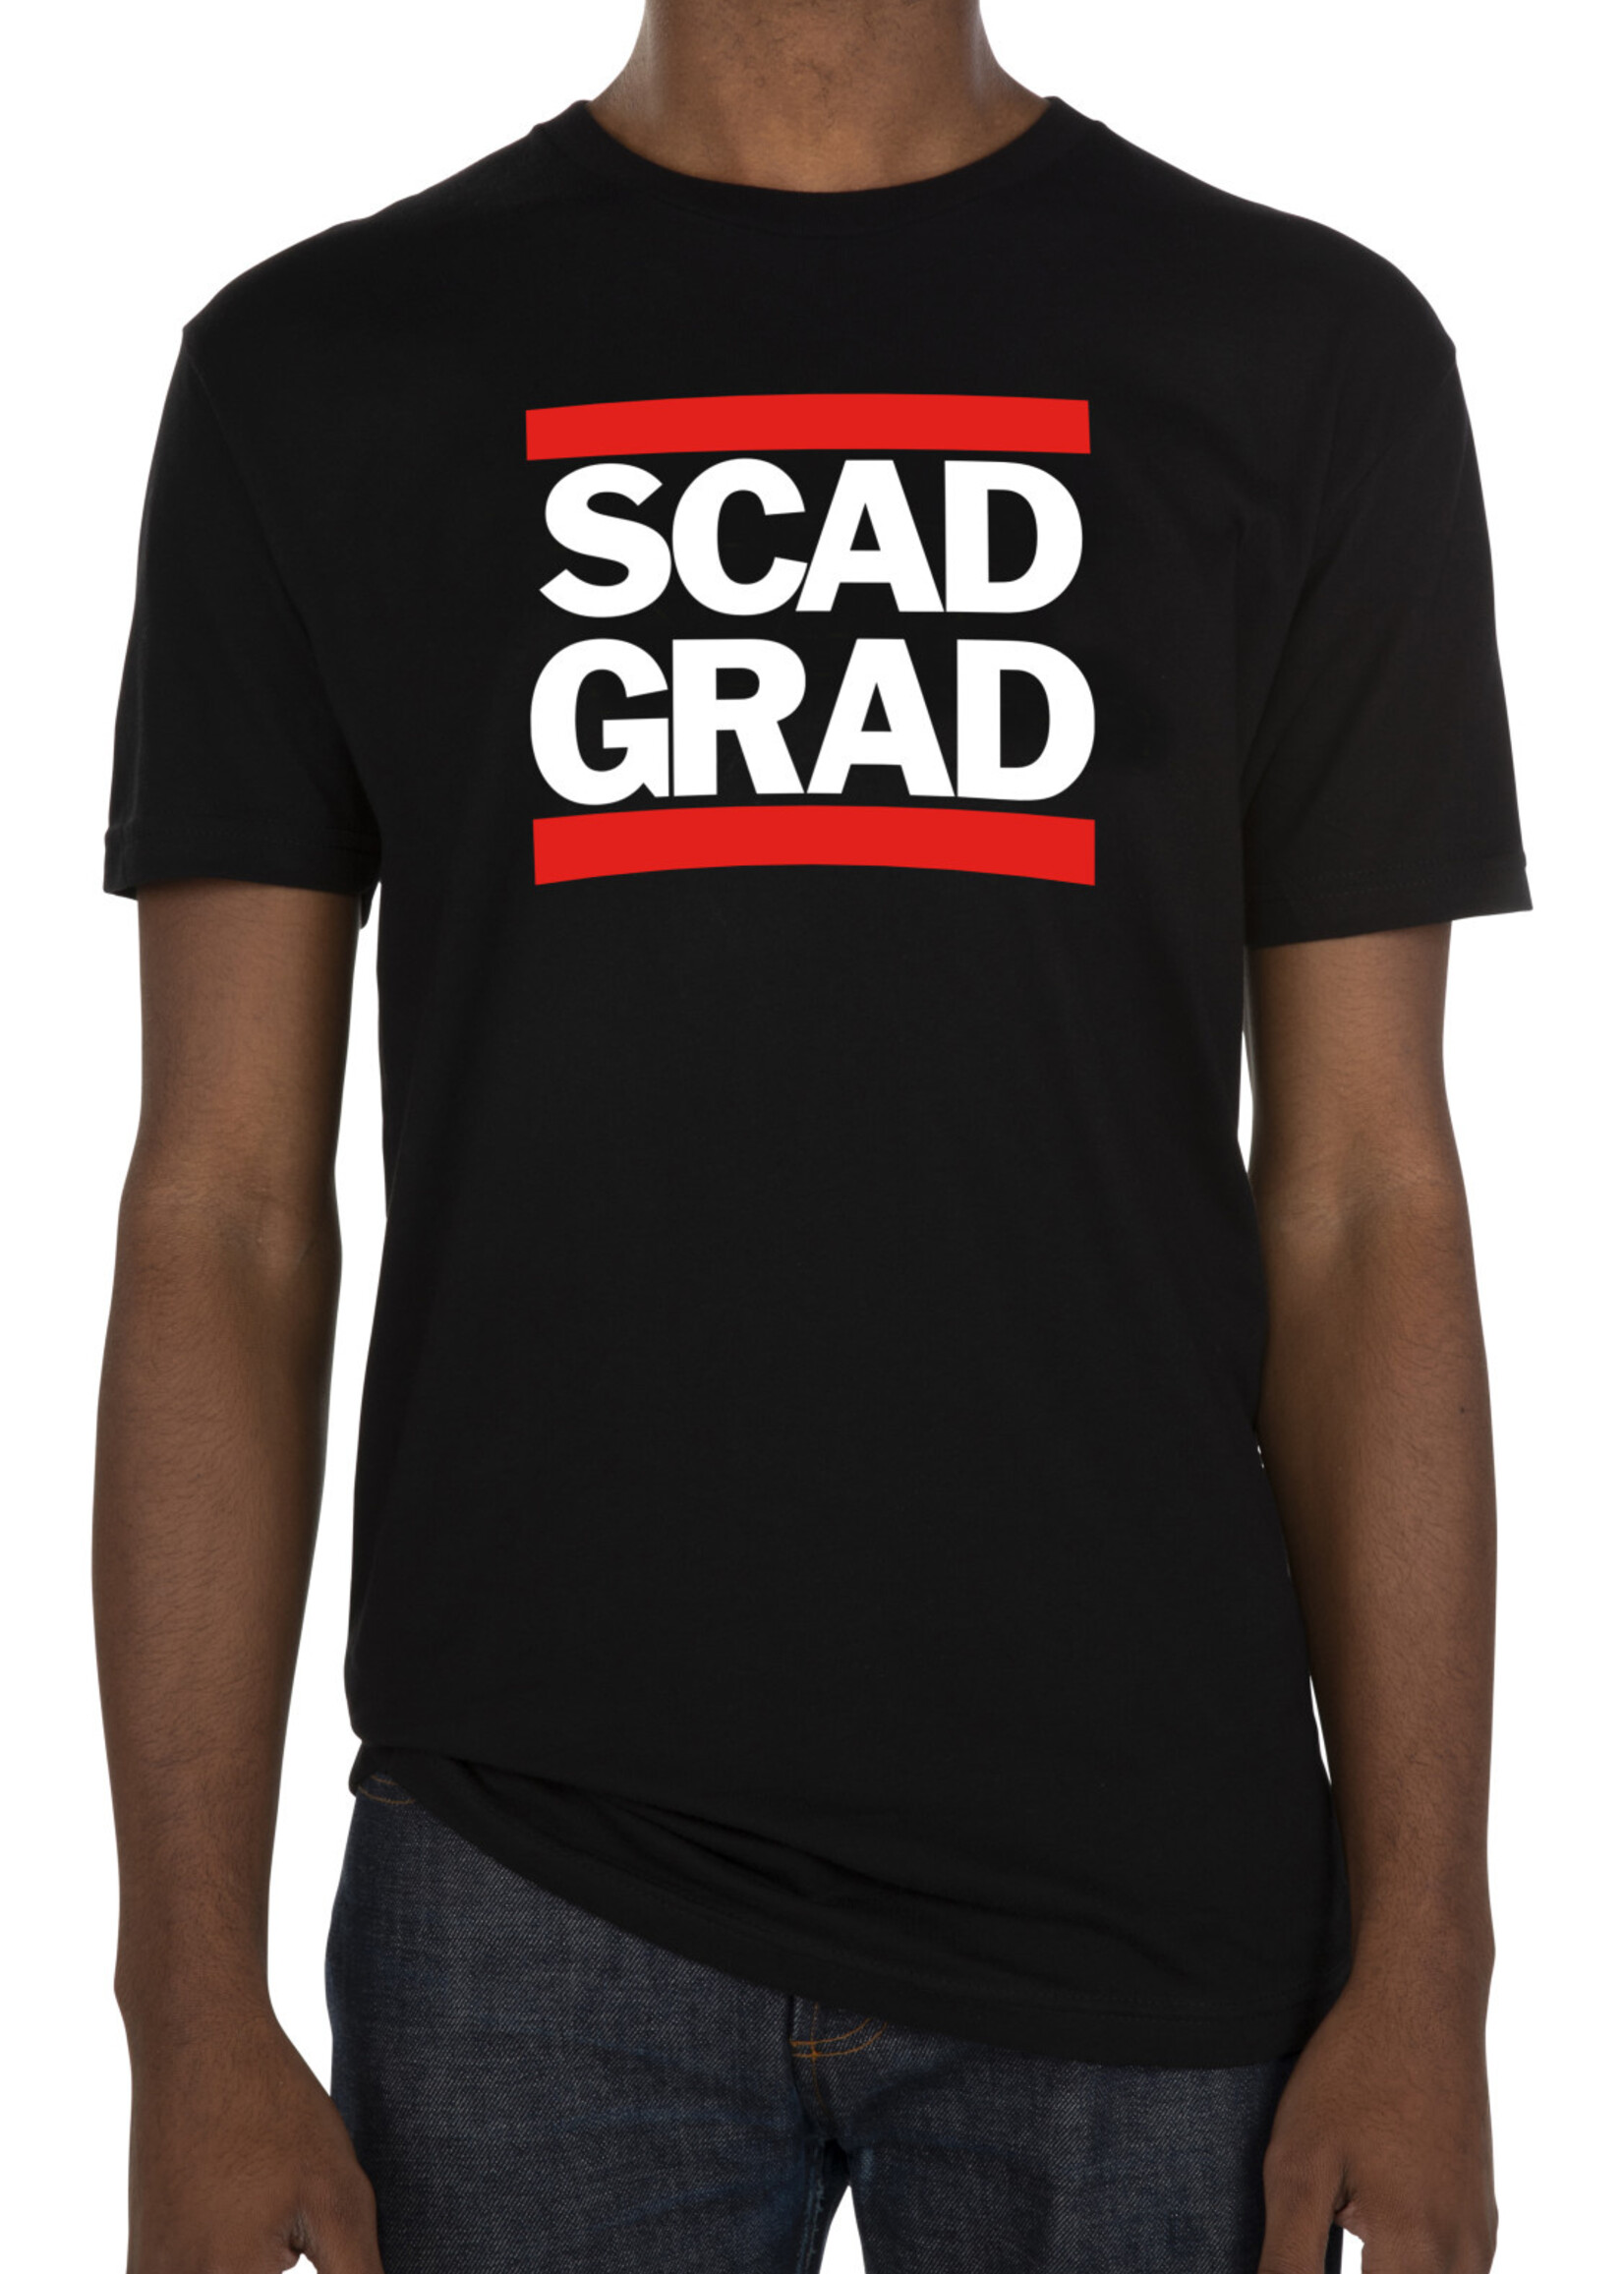 SCAD SCAD GRAD T-Shirt